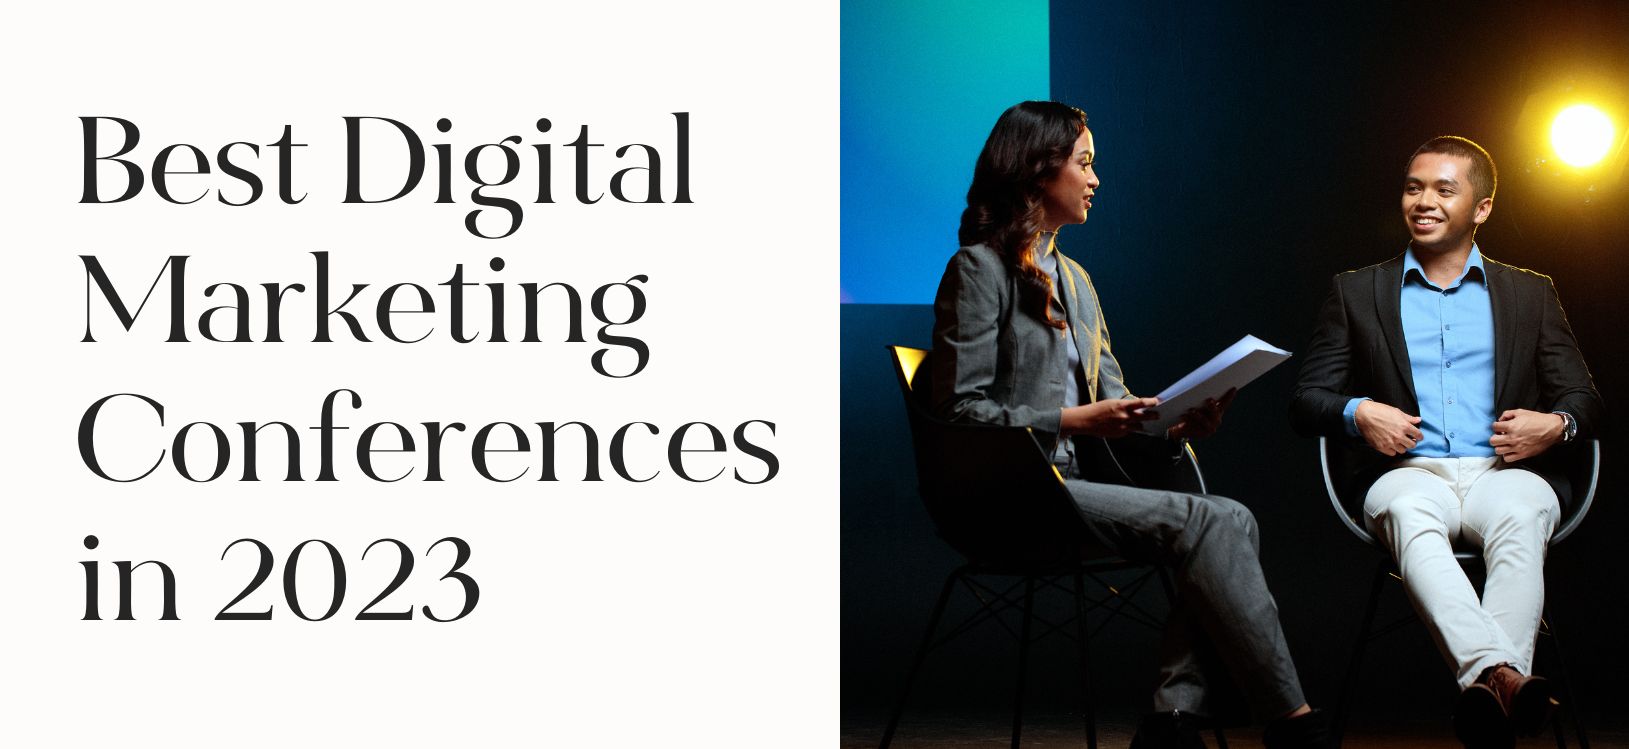 Best Digital Marketing Conferences in 2023 - BuzzShift